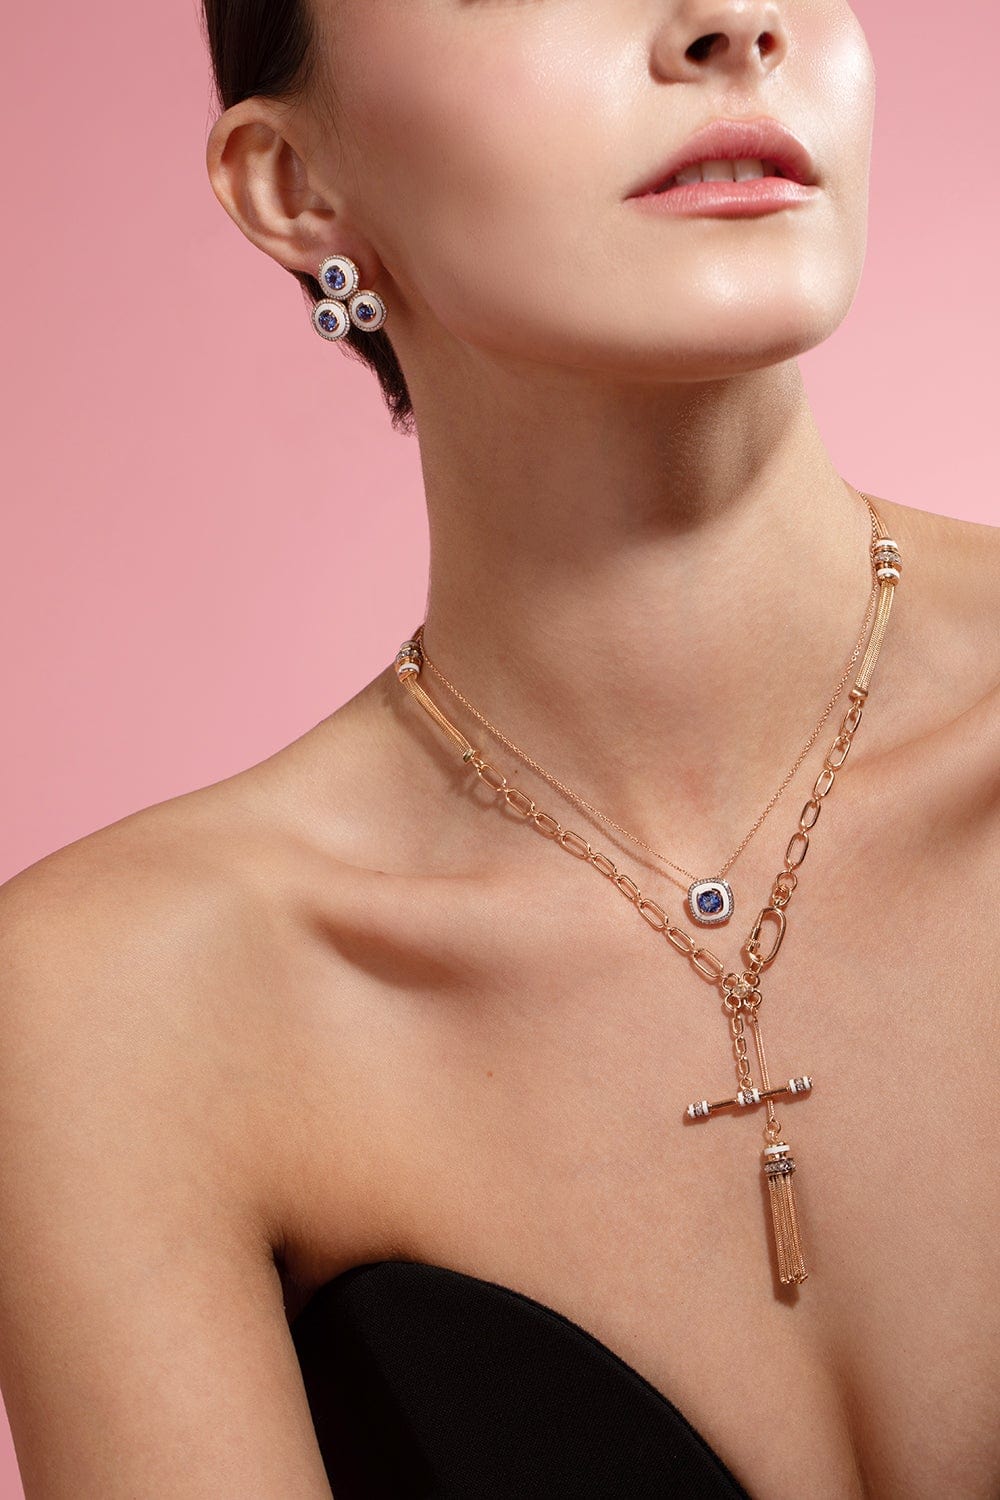 SELIM MOUZANNAR-Kastak Diamond and White Enamel Lariat Necklace-ROSE GOLD